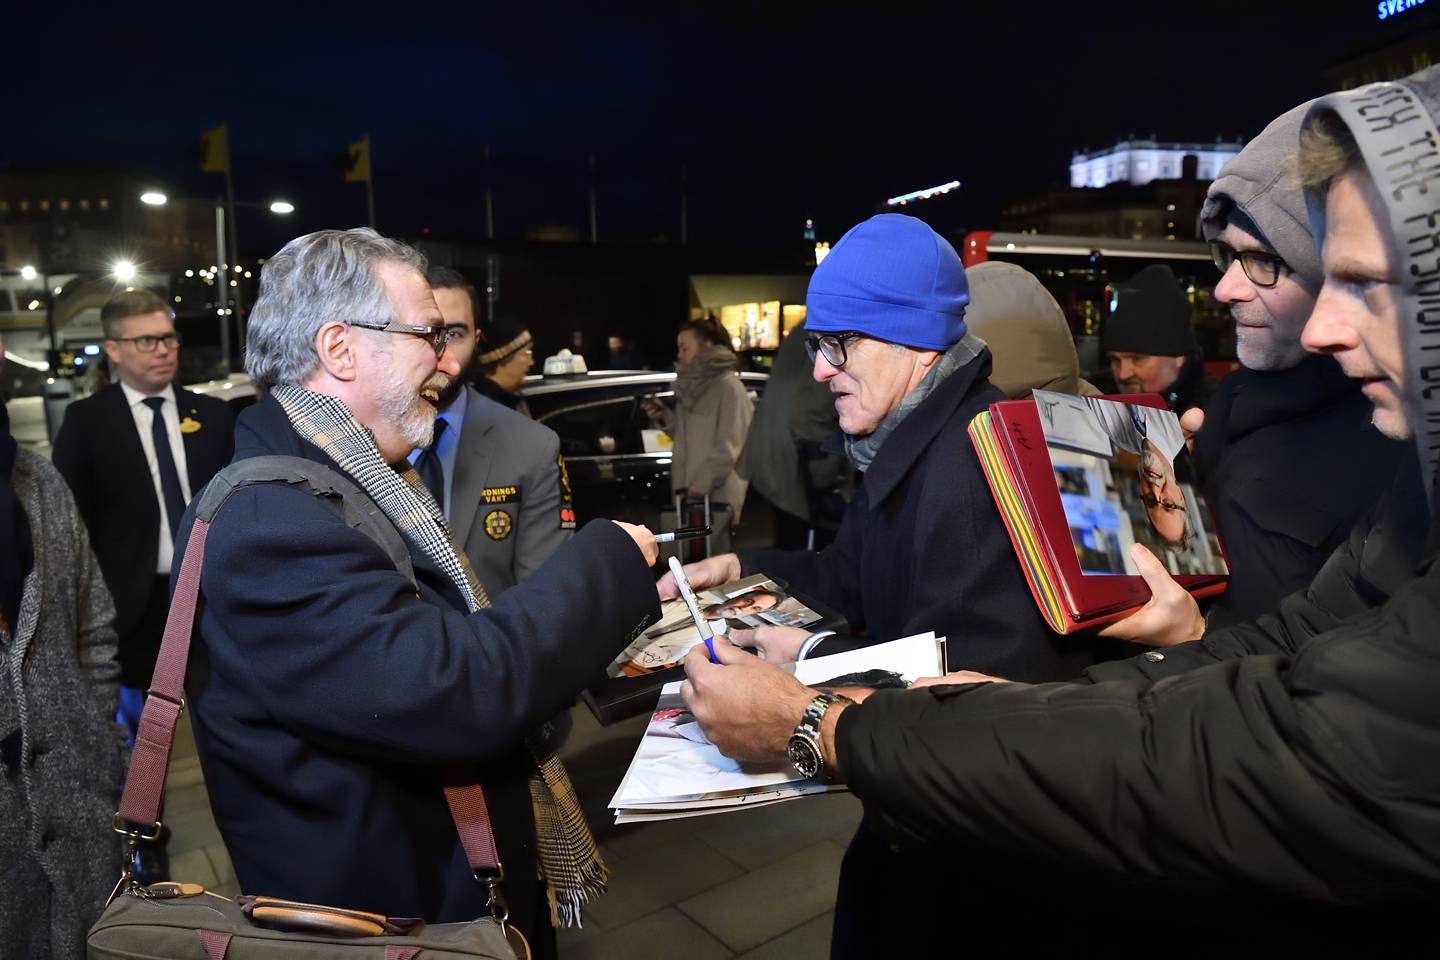 Gregg Semenza signs autographs after arriving at the Grand Hotel in Stockholm. Sweden